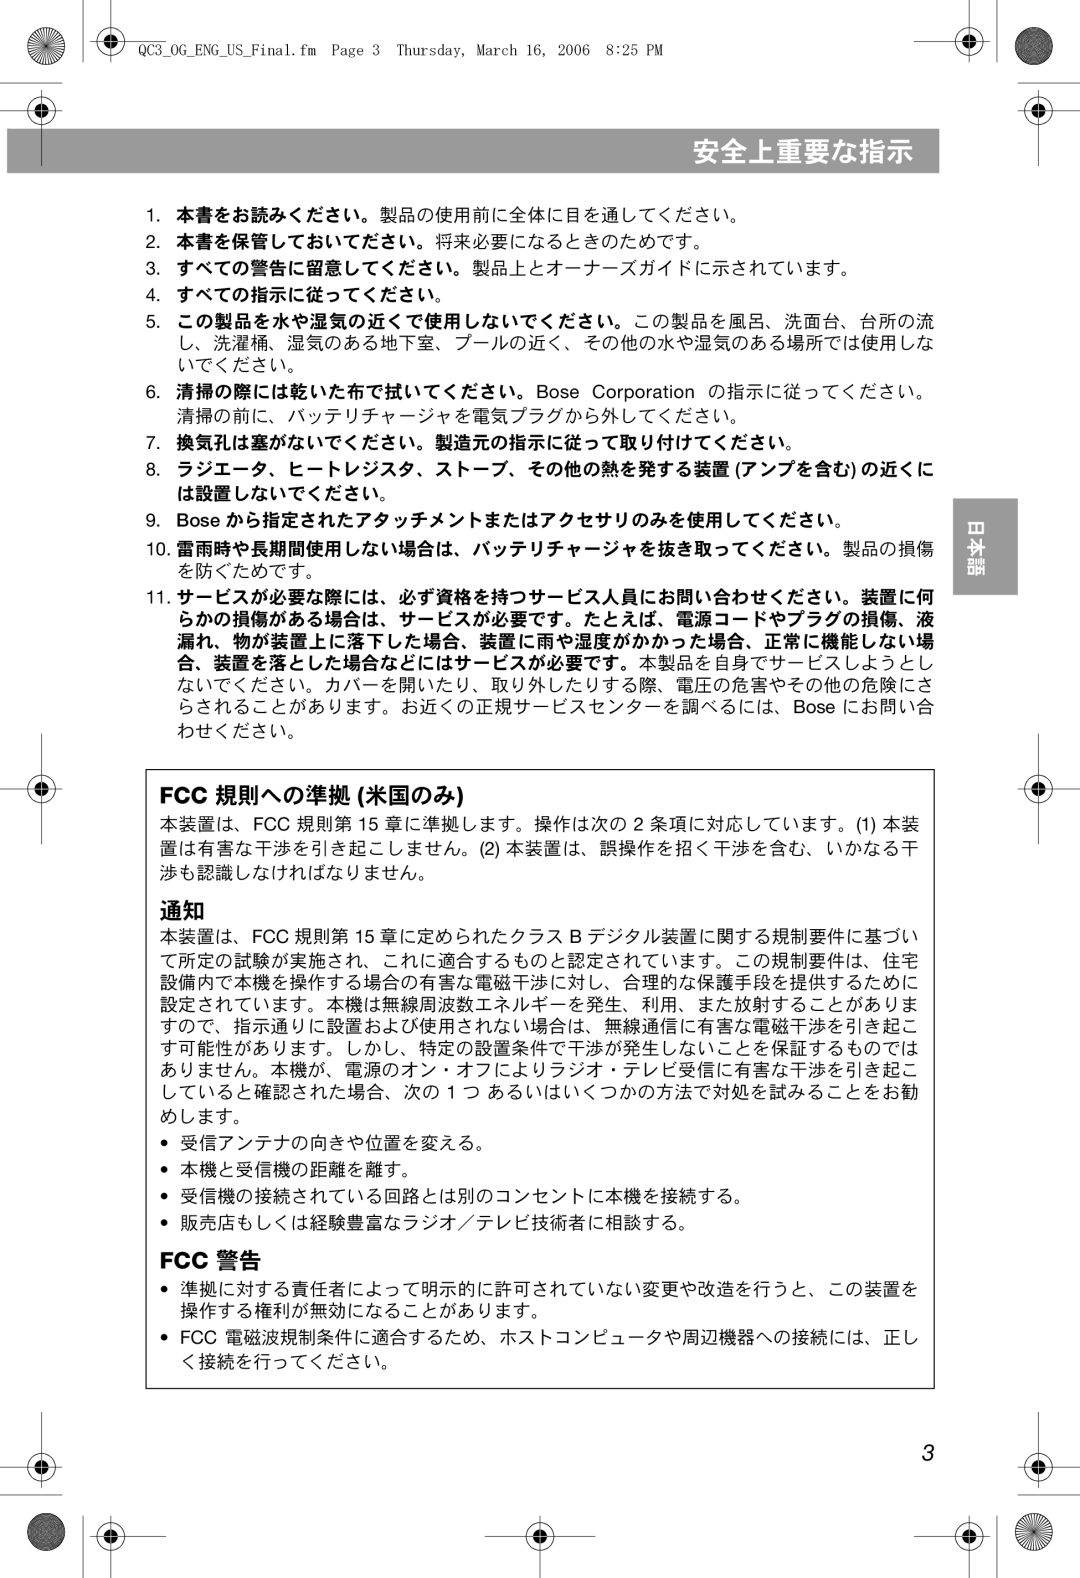 Bose QuietComfort 3 manual 安全上重要な指示, Fcc 規則への準拠 米国のみ, Fcc 警告, Thai Korean S. Chinese Tr. Chinese Arabic 